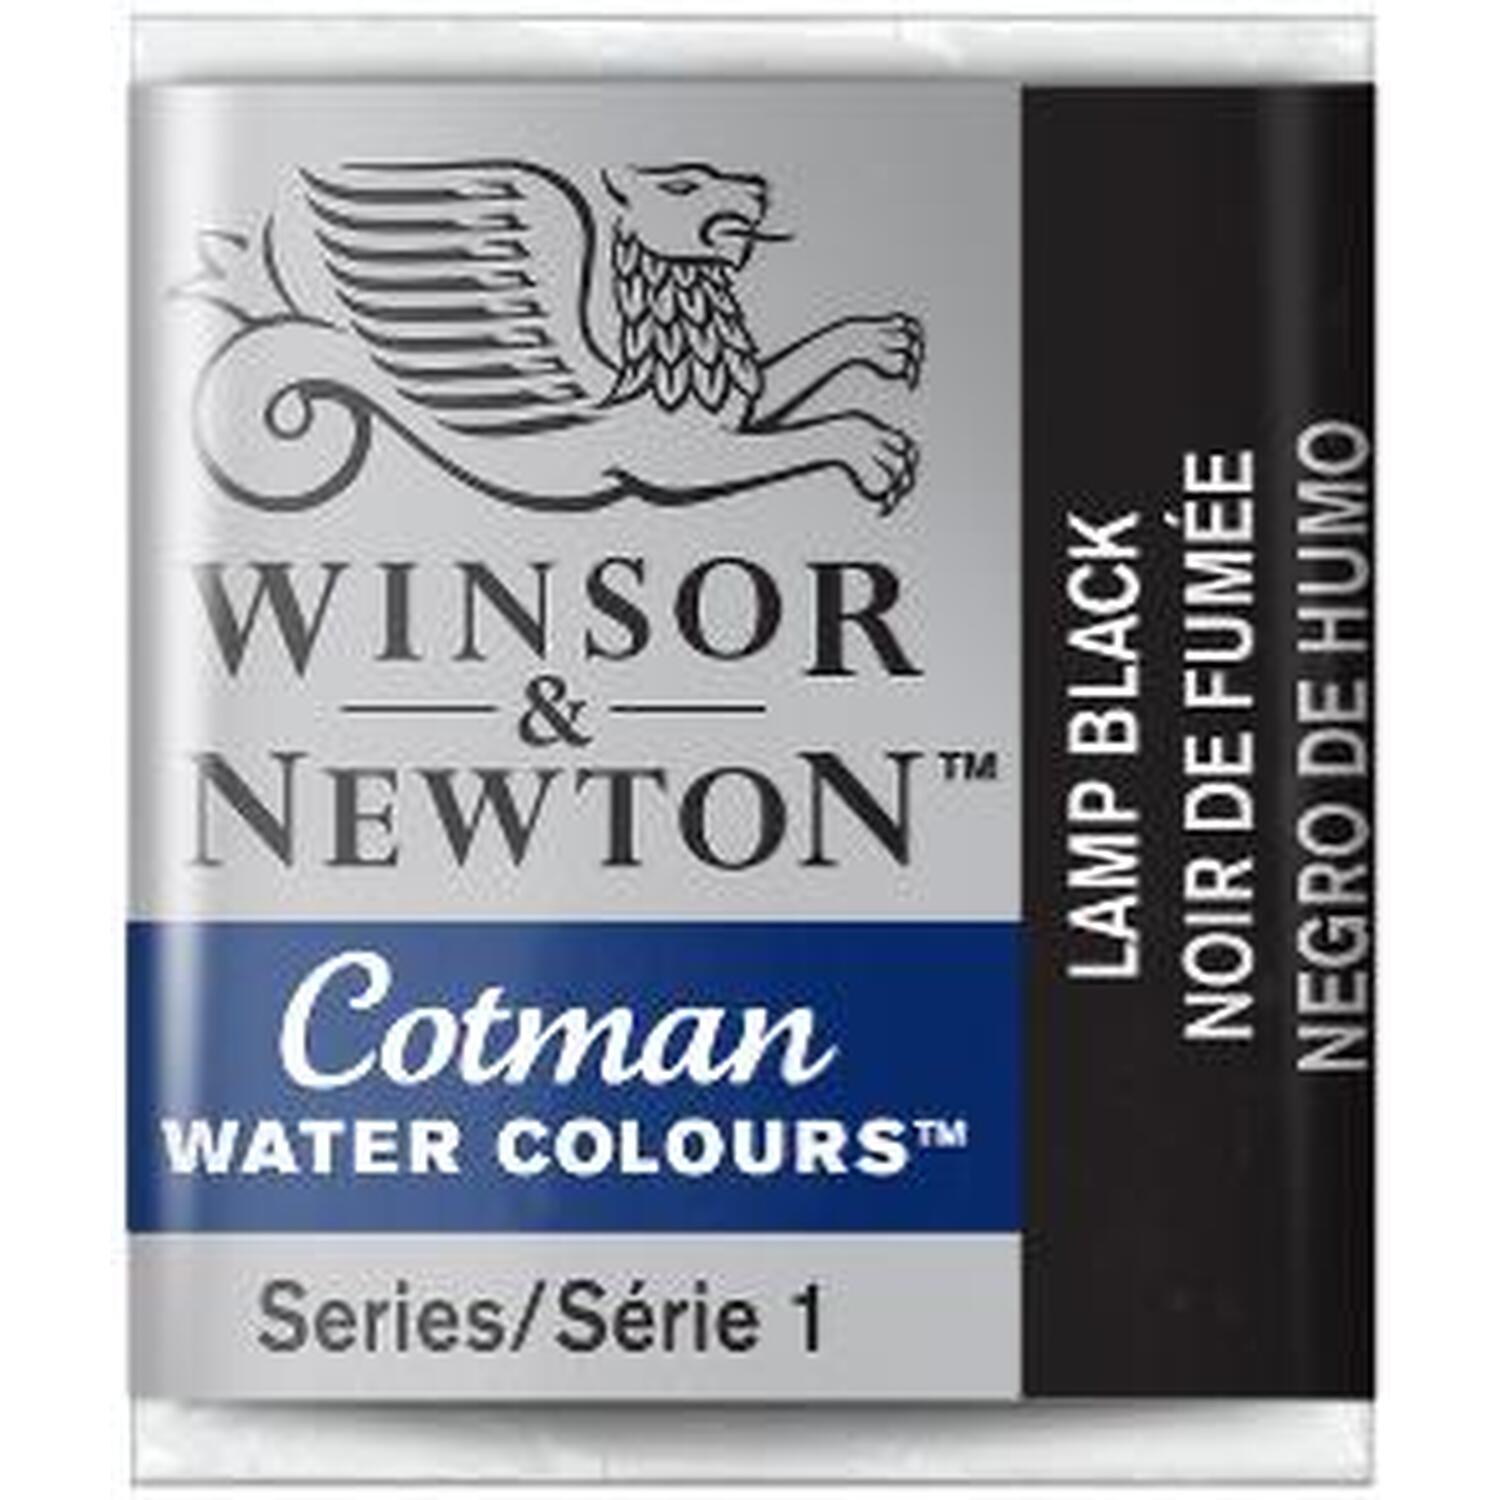 Winsor and Newton Cotman Watercolour Half Pan Paint - Lamp Black Image